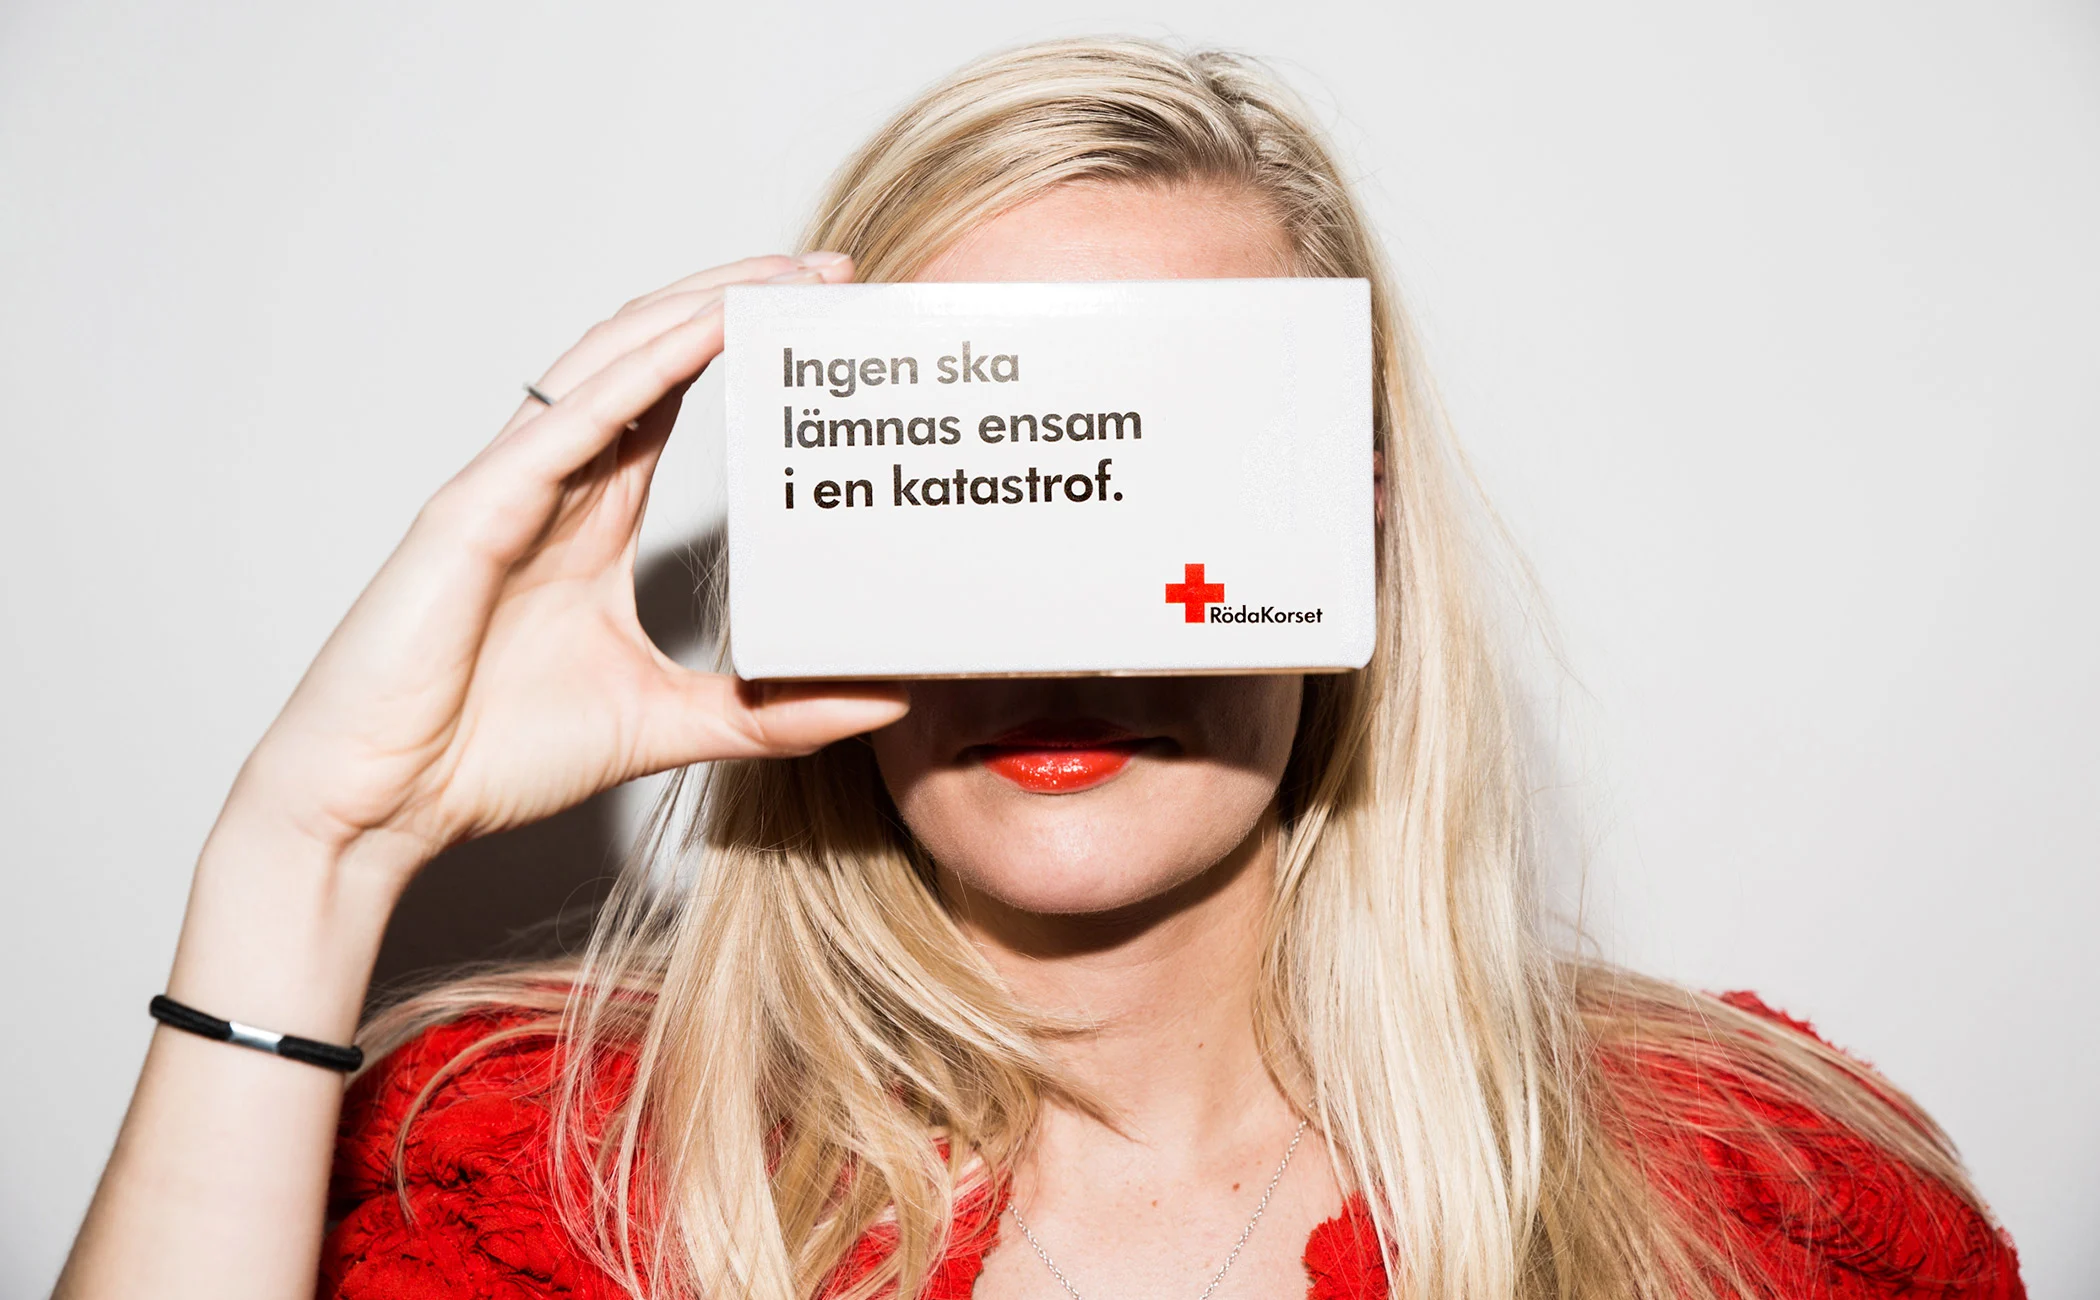 Swedish Red Cross VR - Image 2